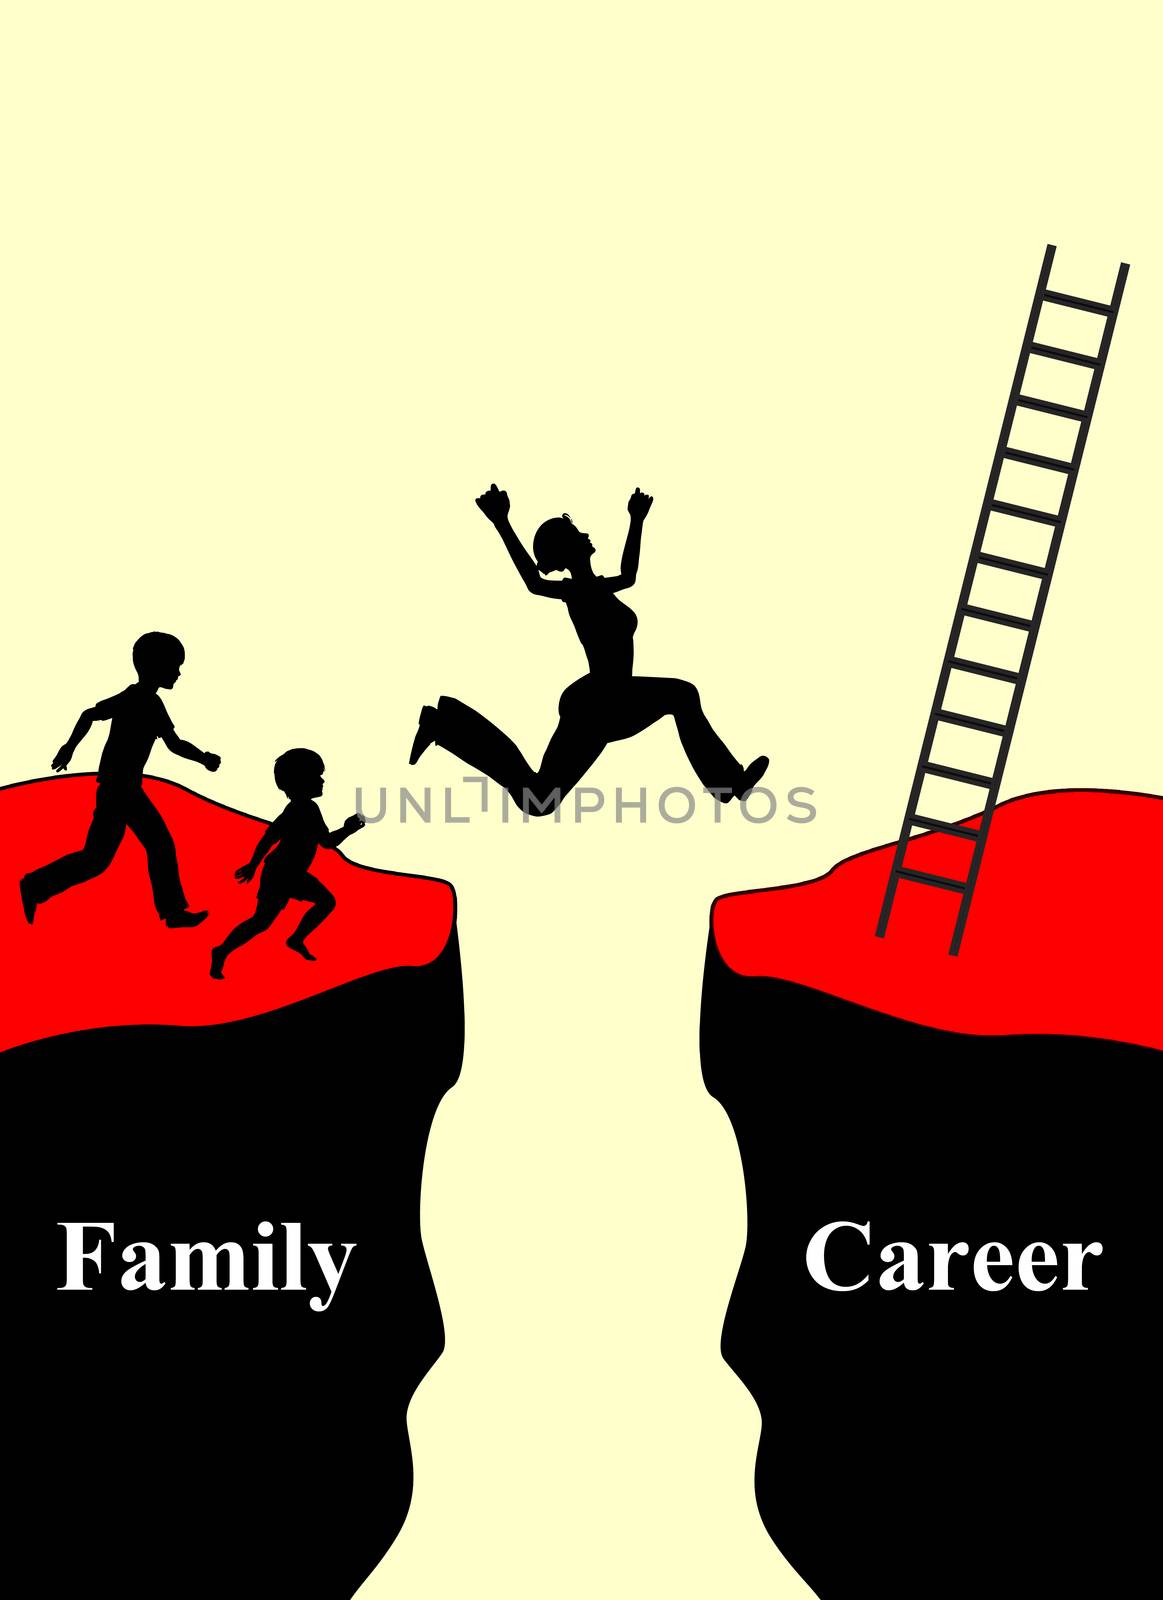 Family and Career by Bambara